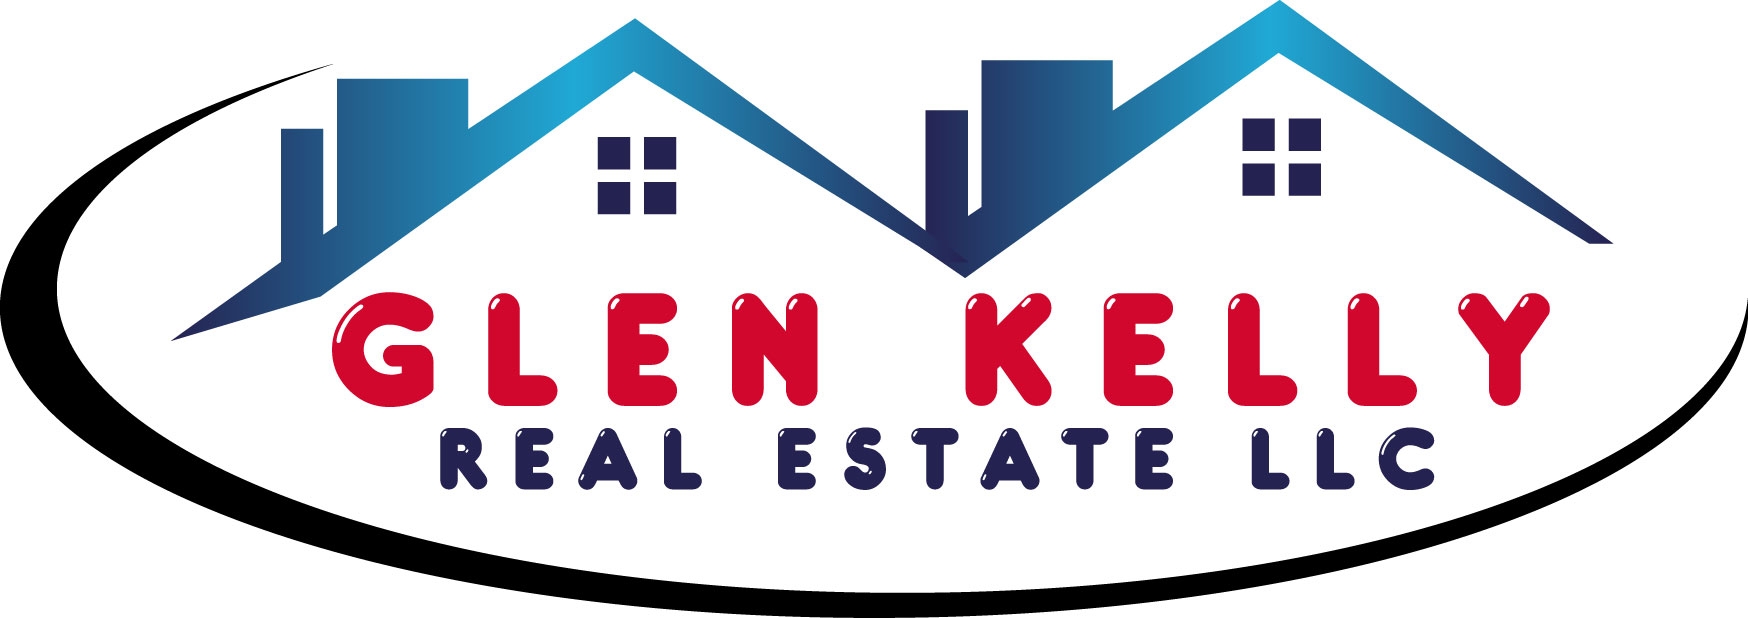 Glen Kelly Real Estate, Glen Kelly, Glen Kelly Realtors, NJ, New Jersey, Lennar, Real Estate